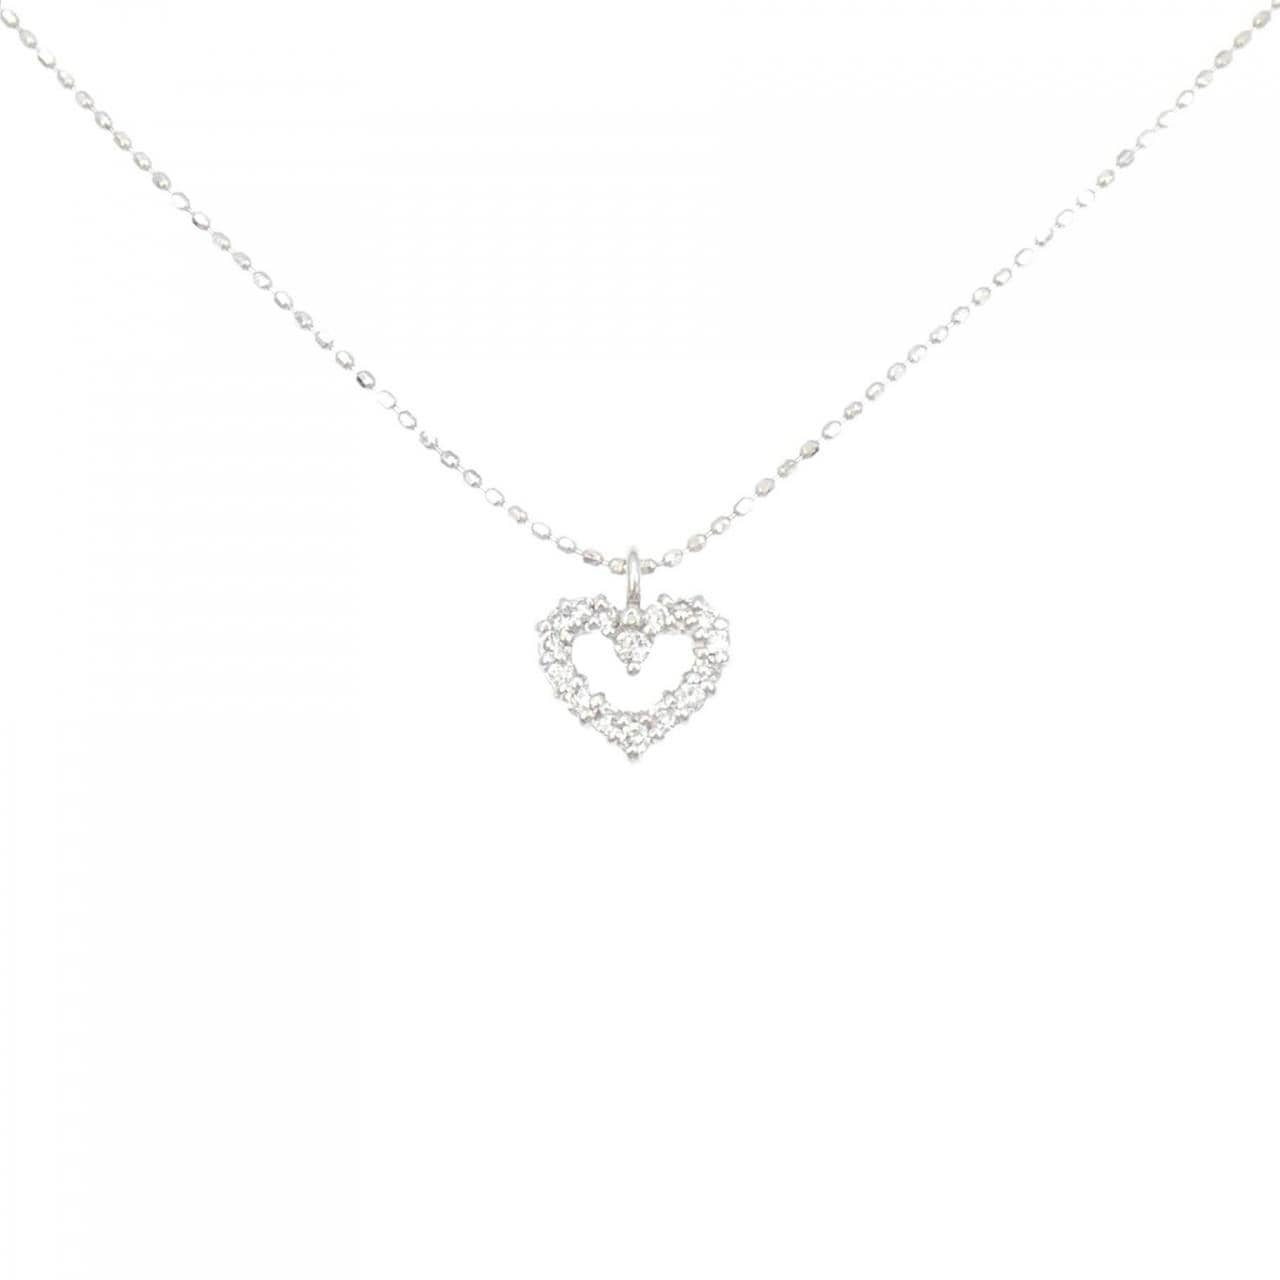 K18WG/750WG heart Diamond necklace 0.13CT